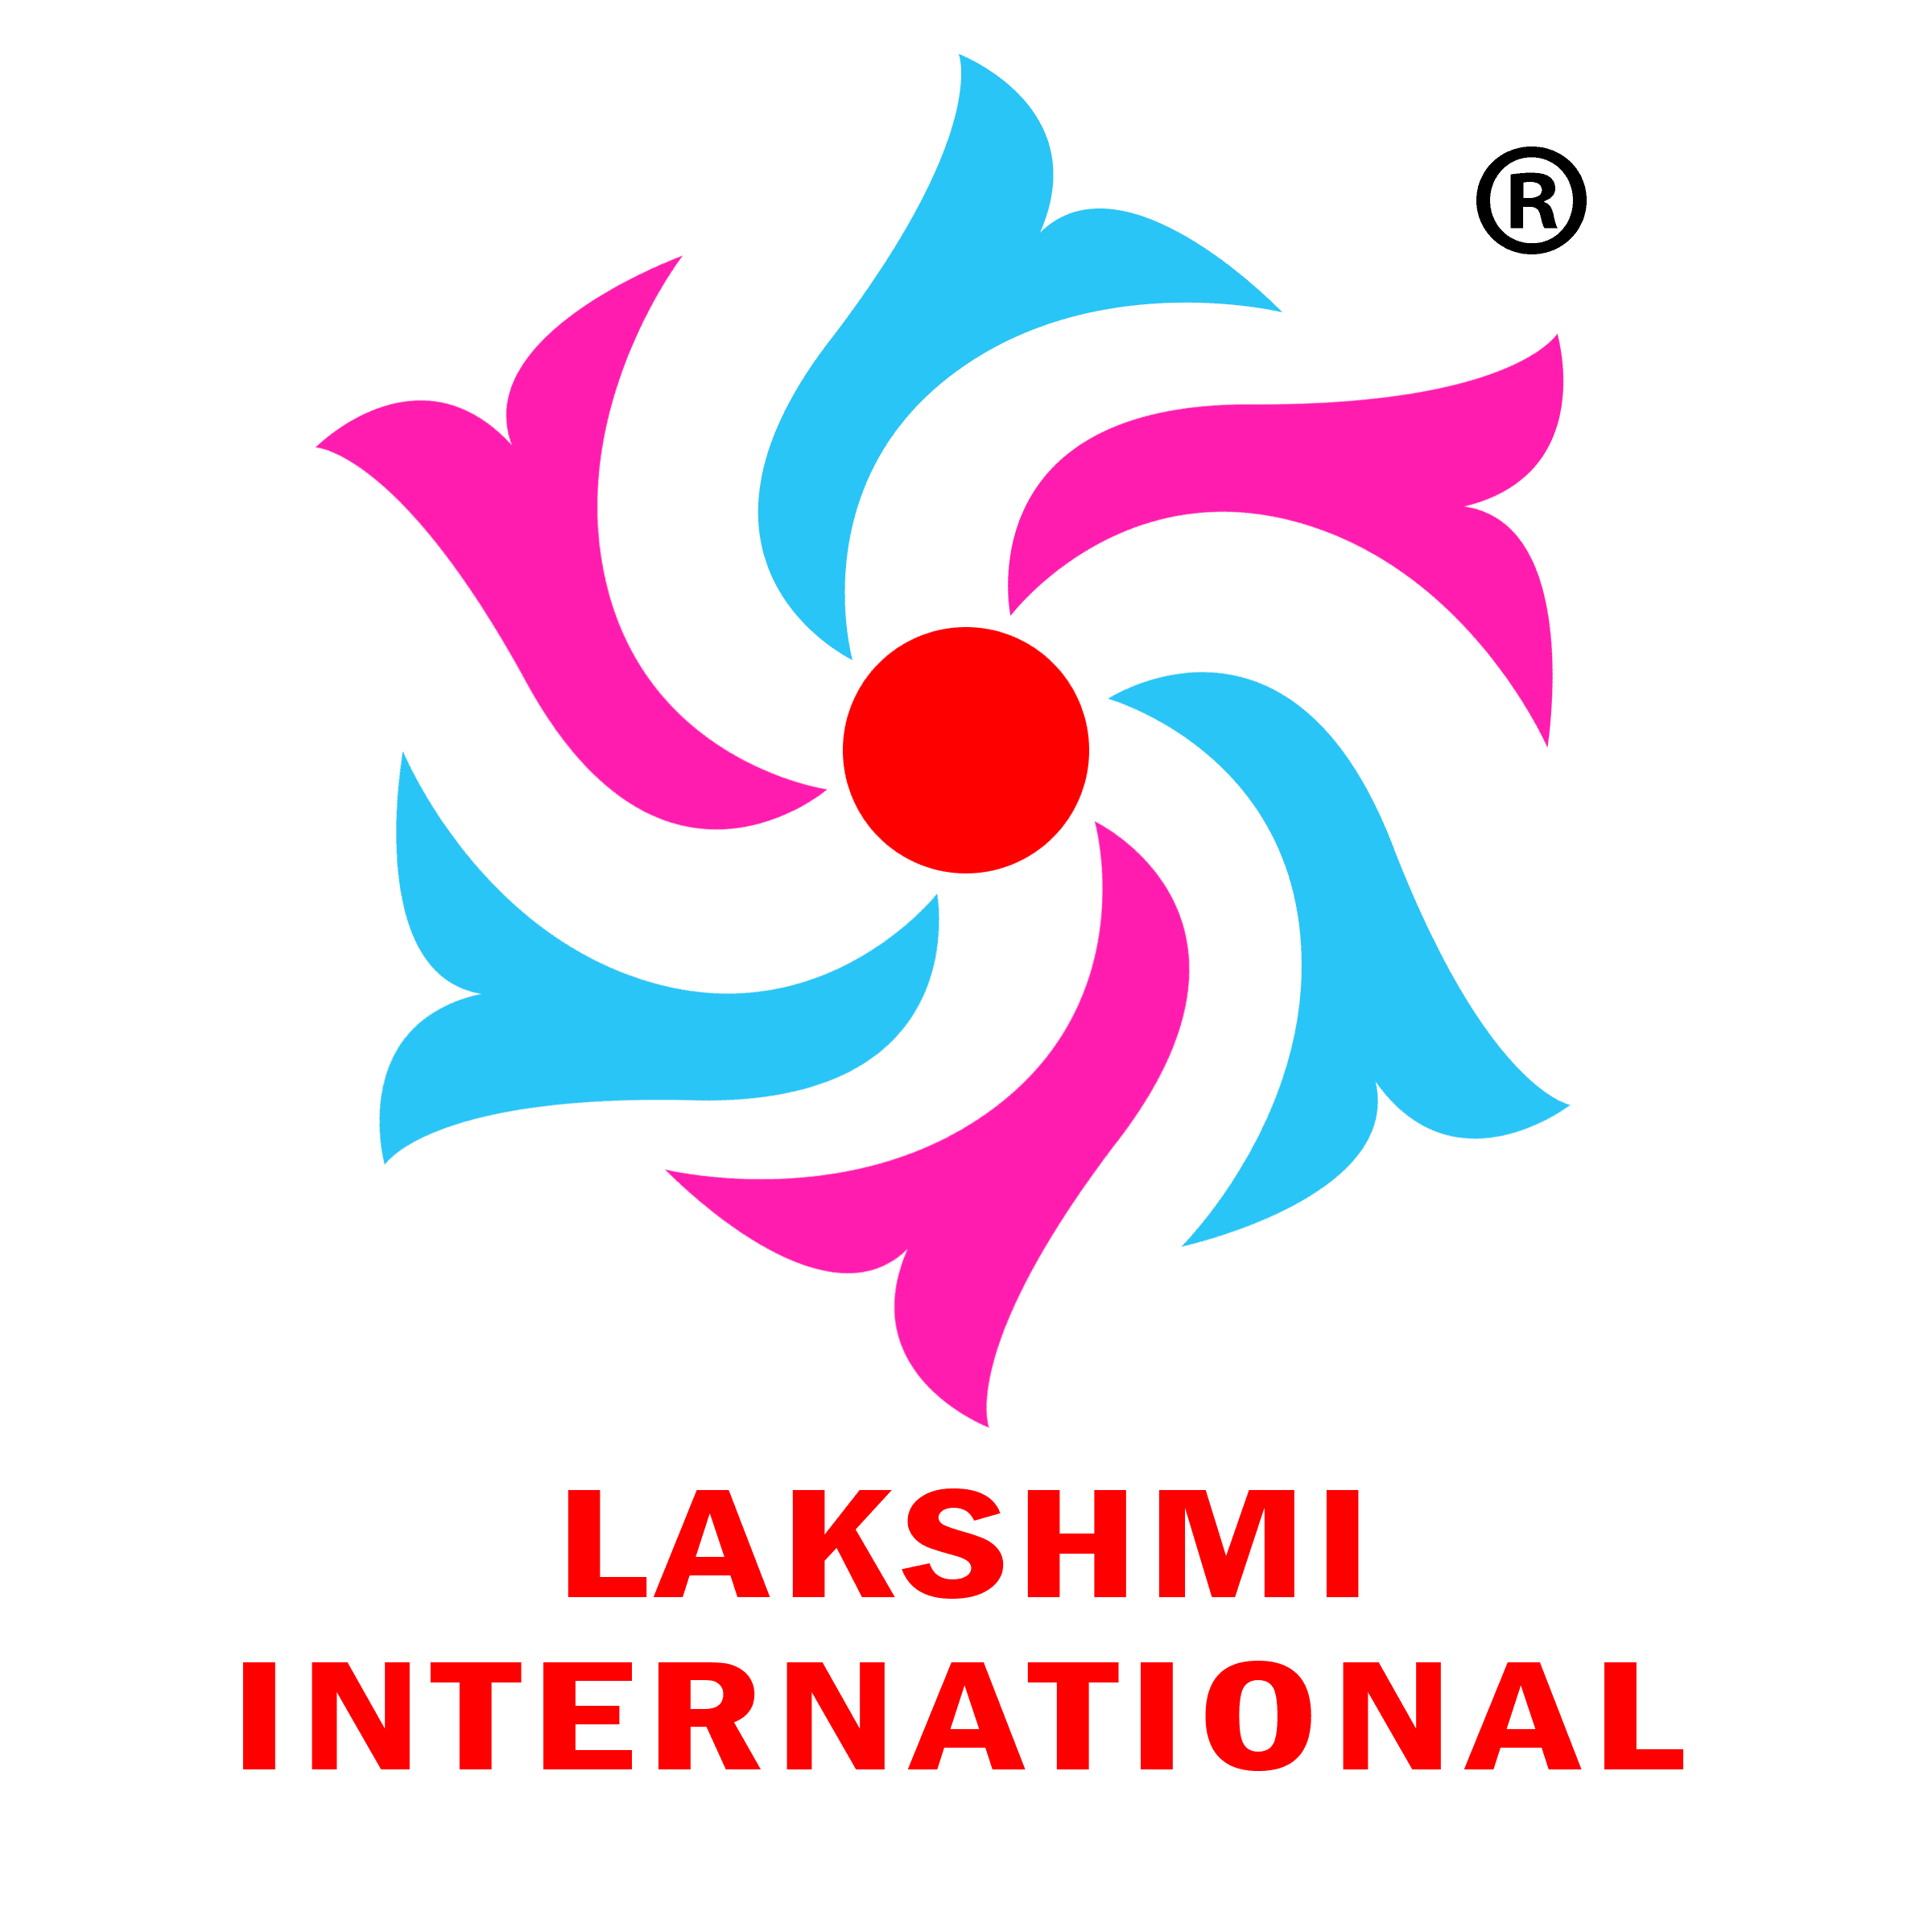 LAKSHMI INTERNATIONAL